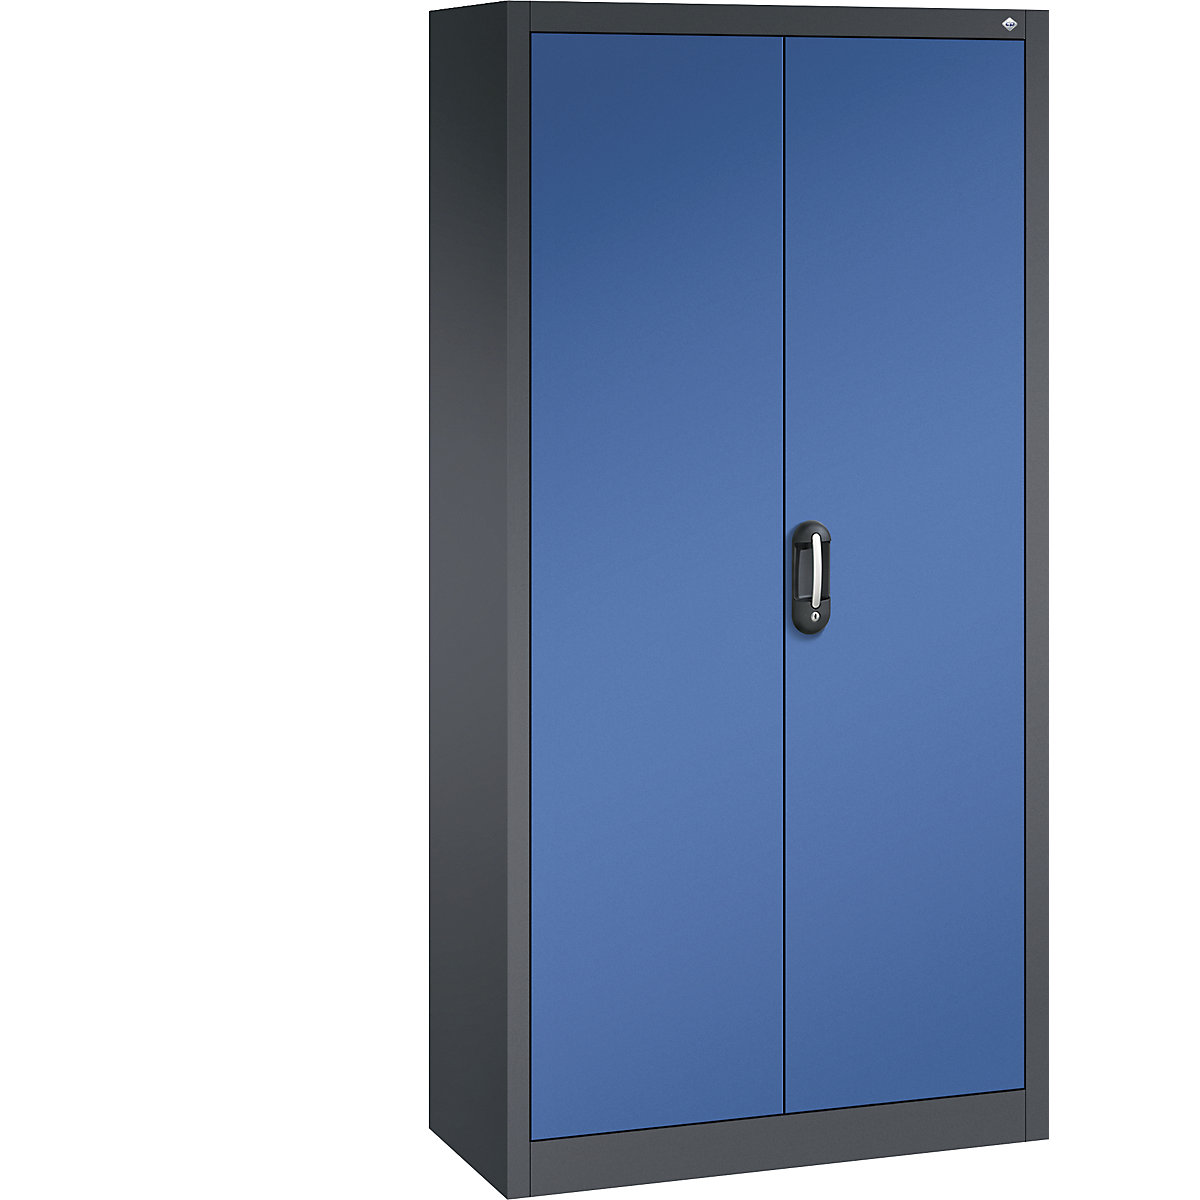 ACURADO universal cupboard – C+P, WxD 930 x 400 mm, black grey / gentian blue-17